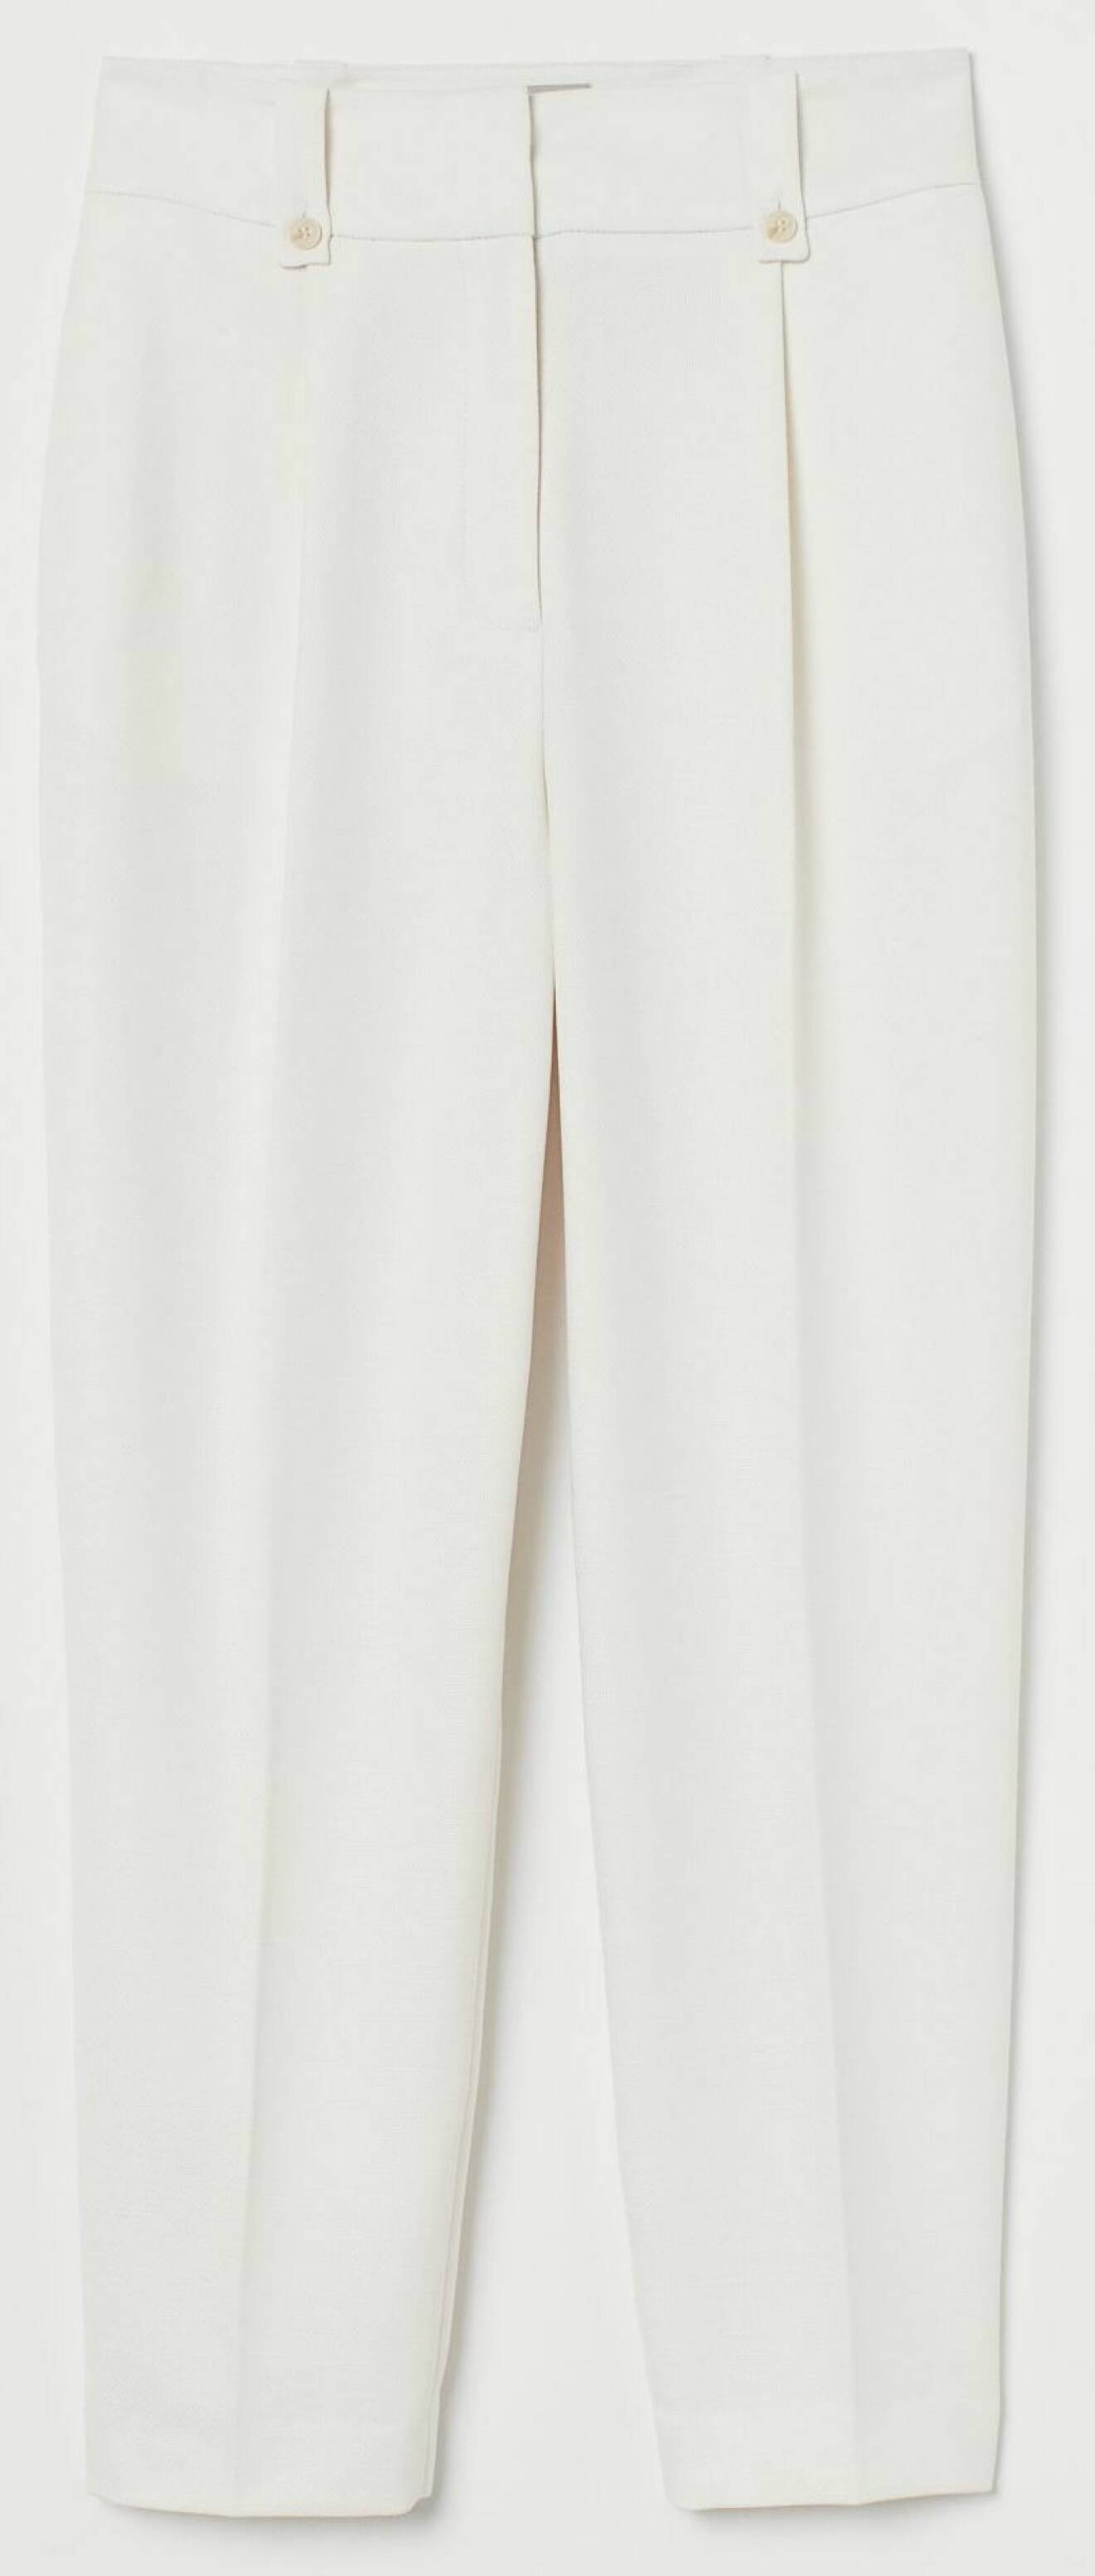 Vita kostymbyxor från H&amp;M.